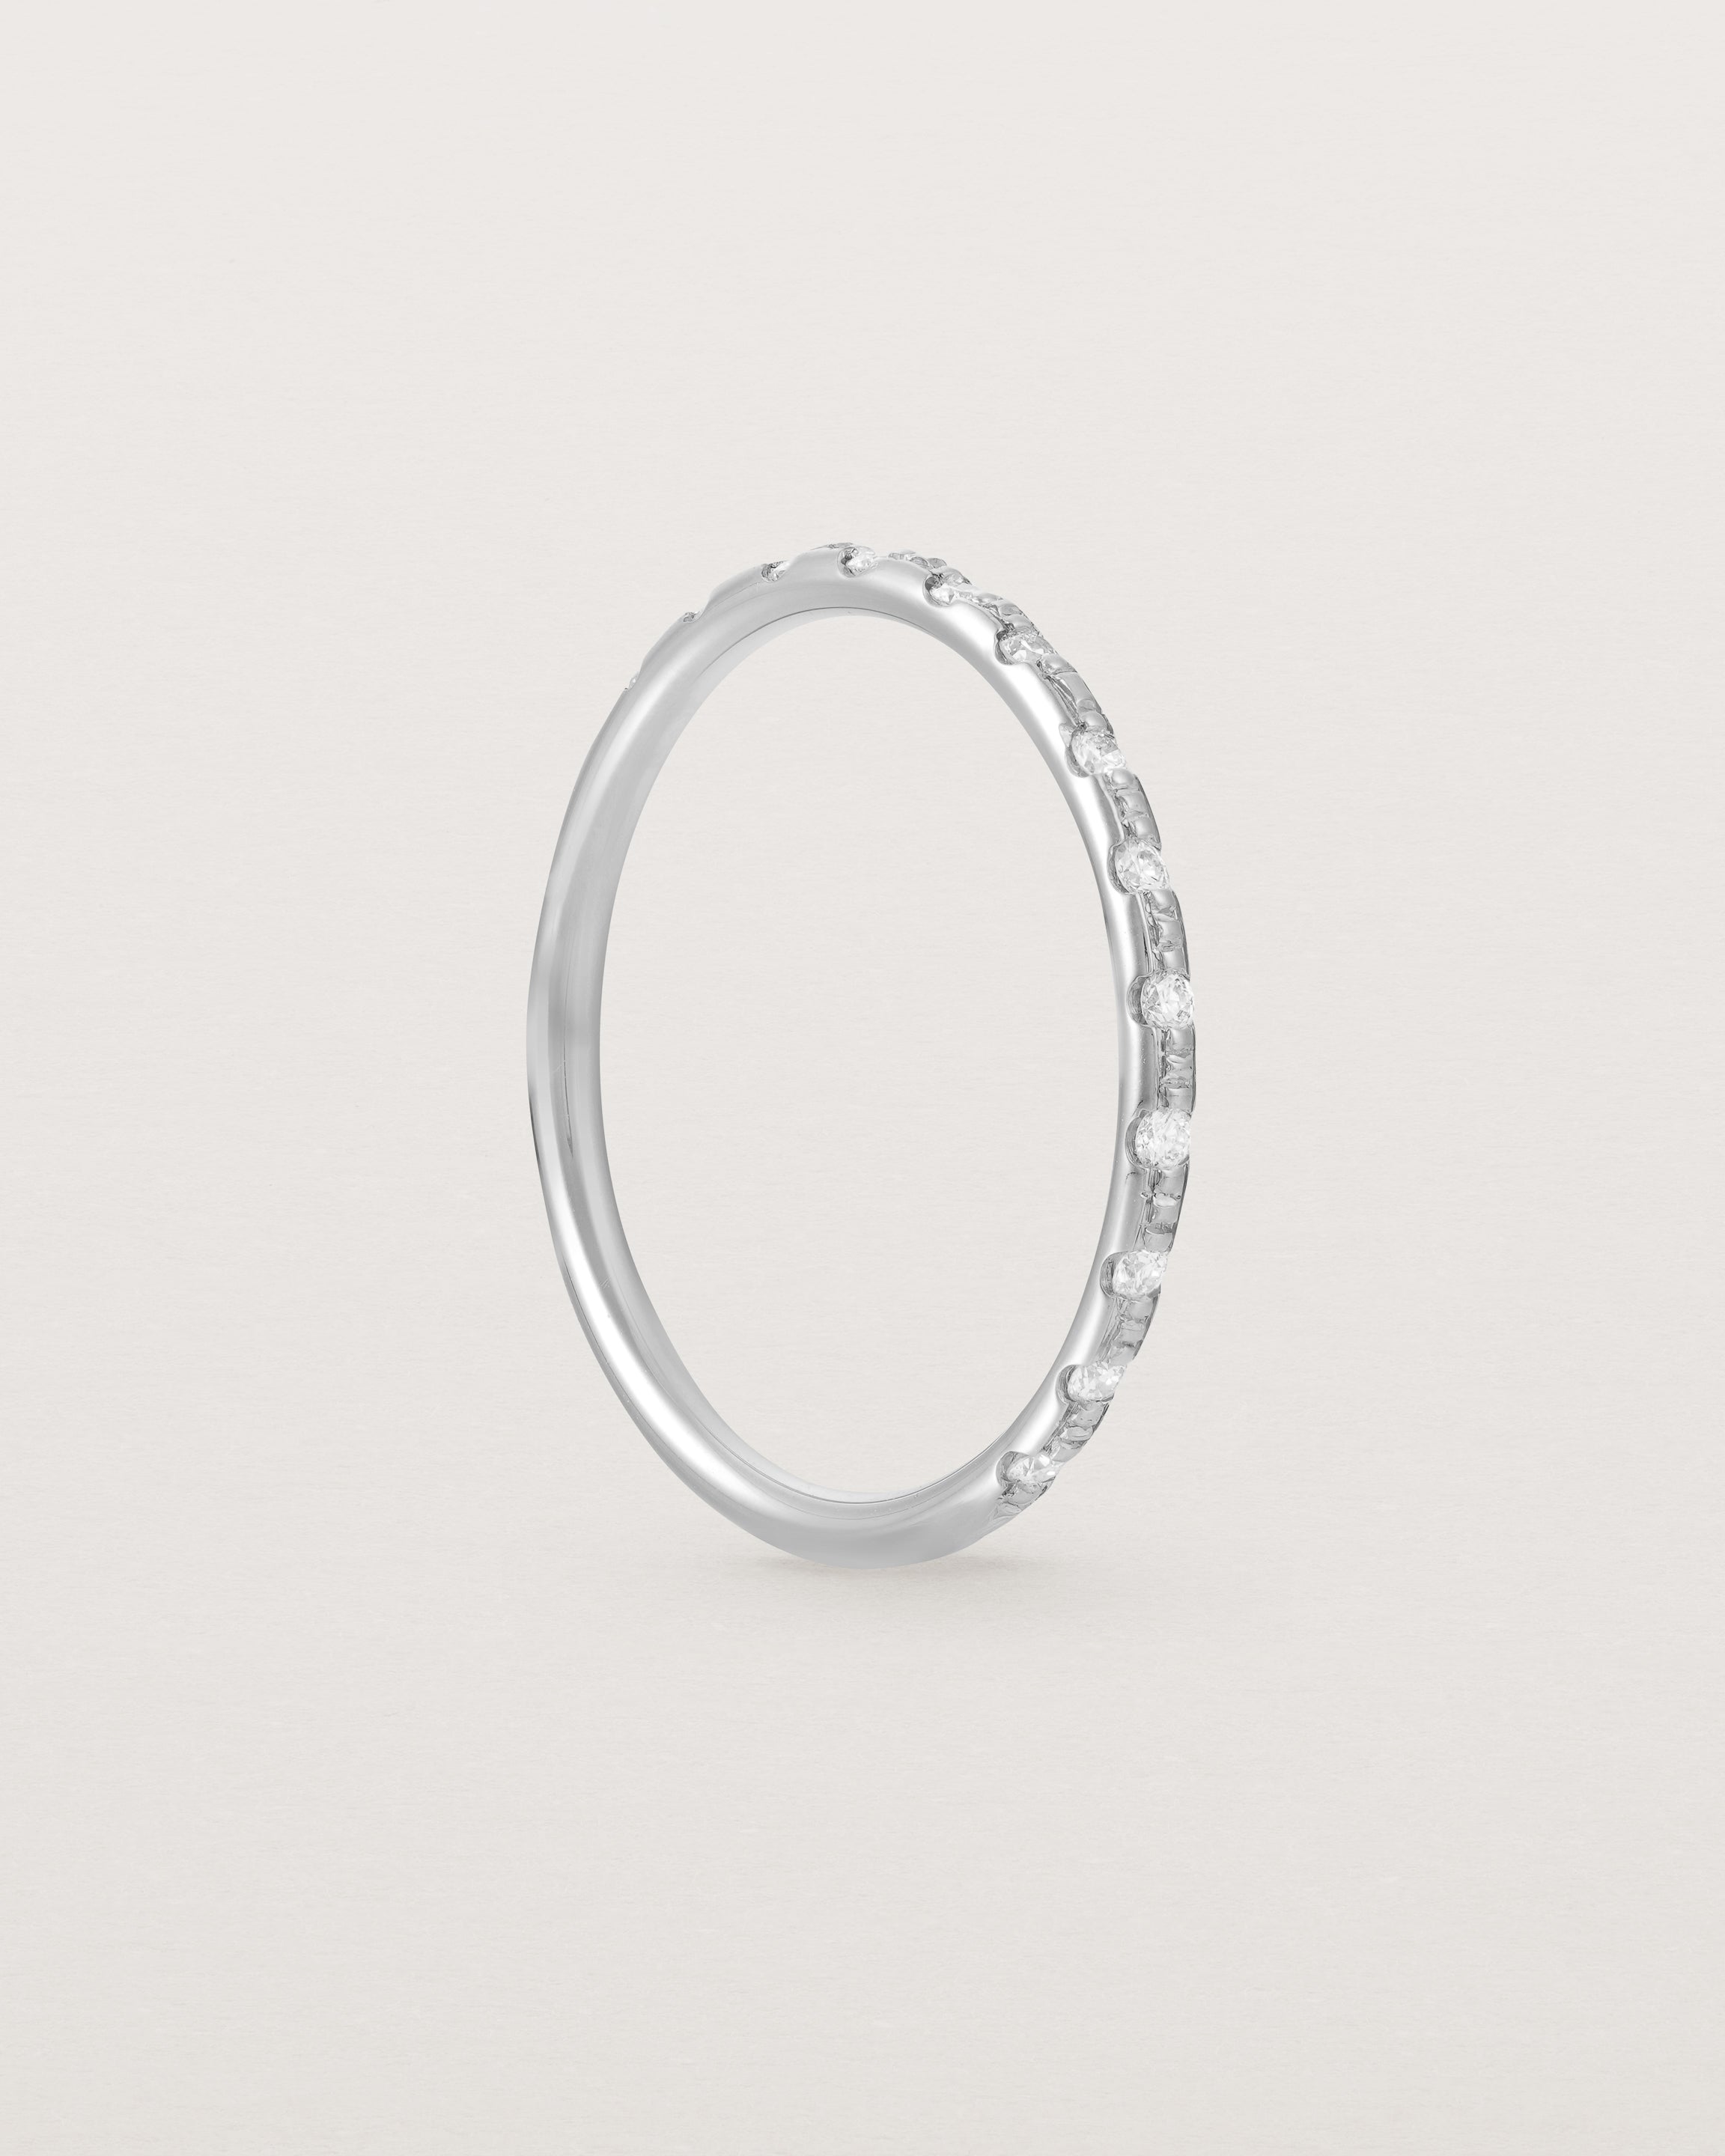 Angled View of Cascade Round Profile Wedding Ring | Diamonds | White Gold